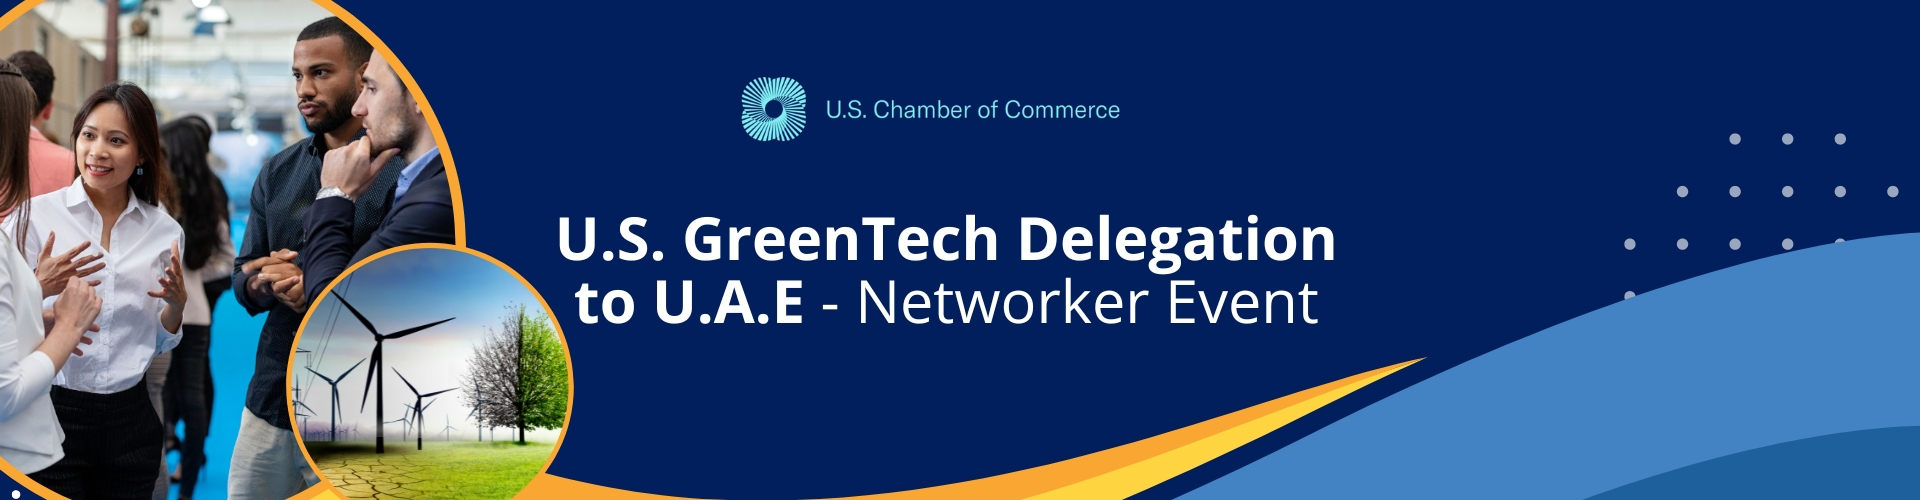 thumbnails U.S. GreenTech Delegation to U.A.E. Networker Event